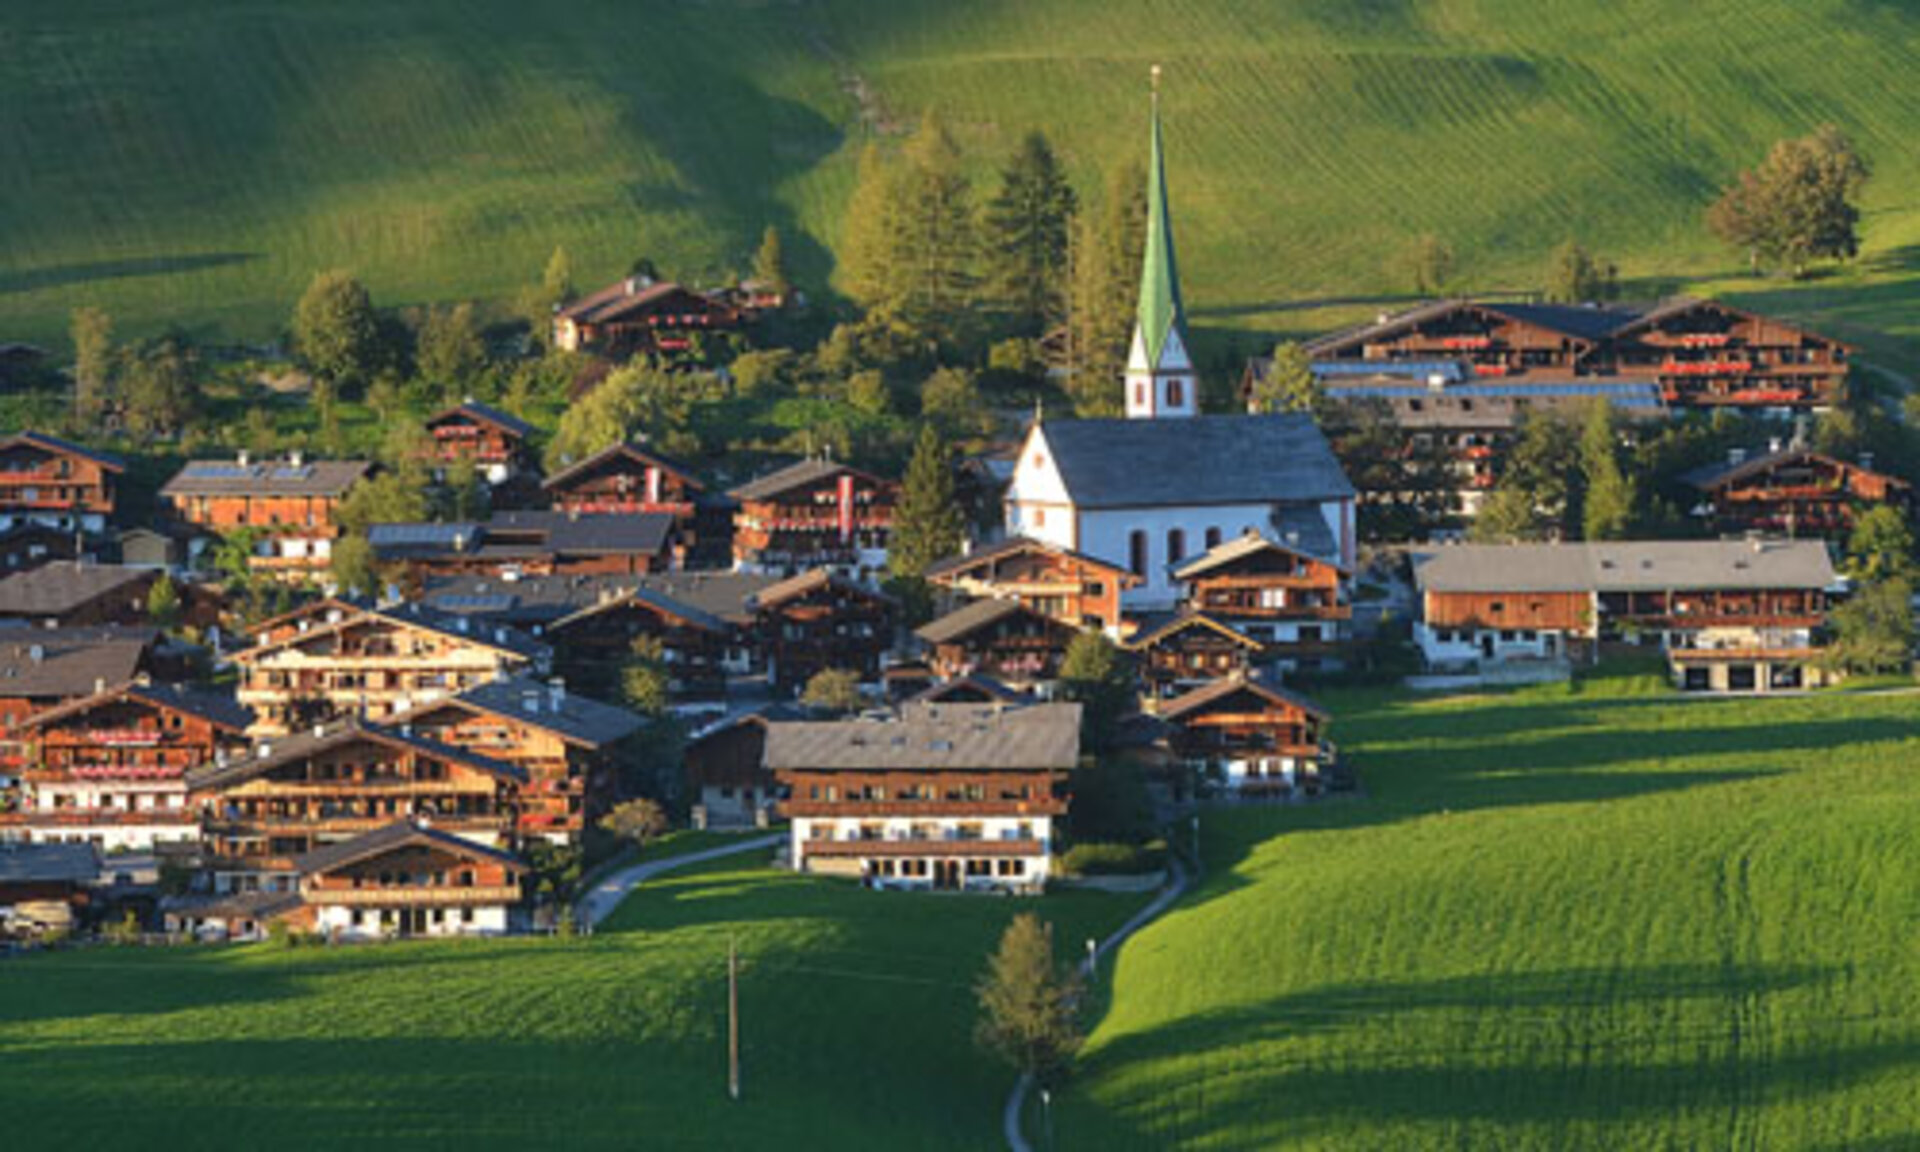 The village of Alpbach